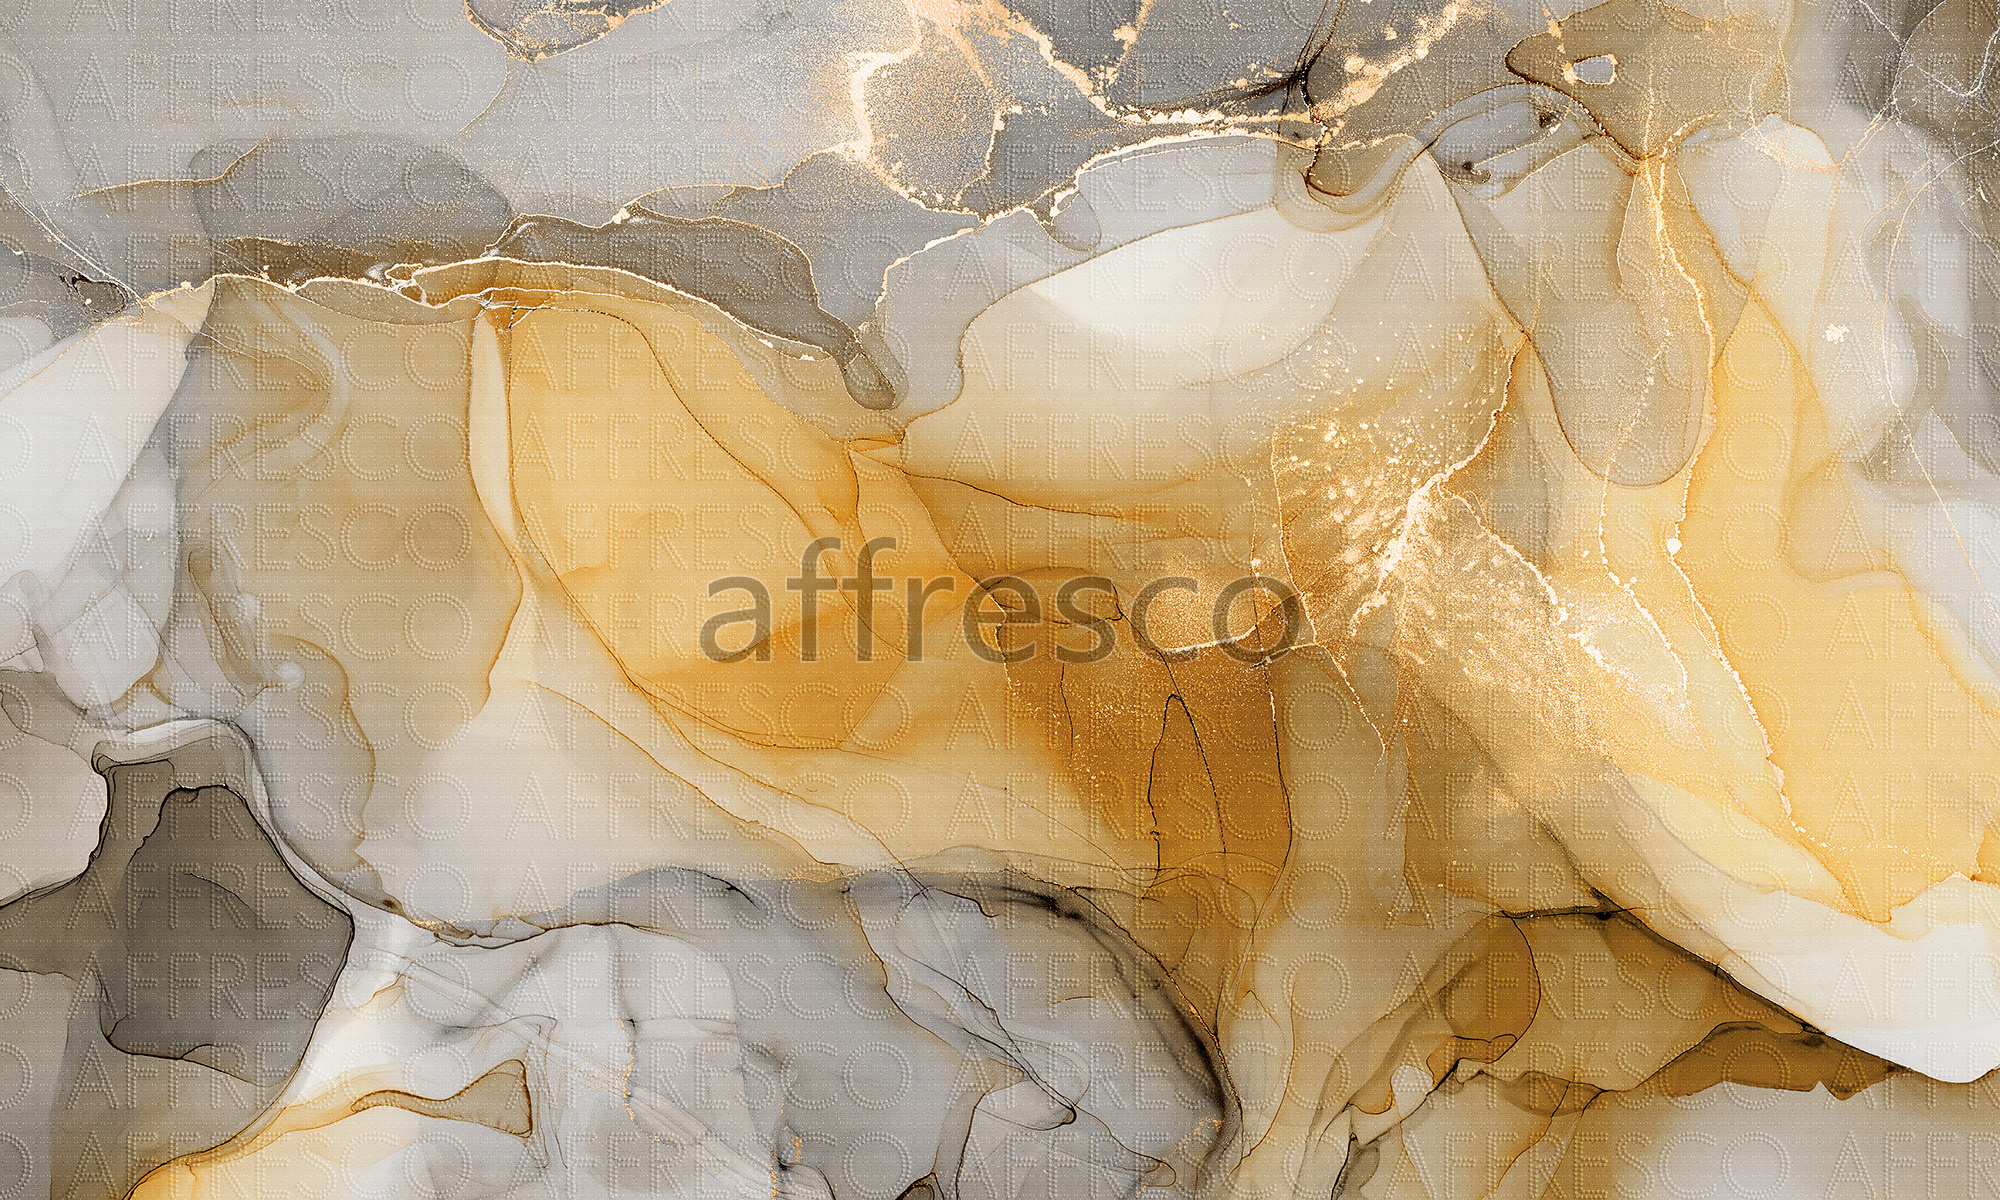 RE852-COL2 | Fine Art | Affresco Factory